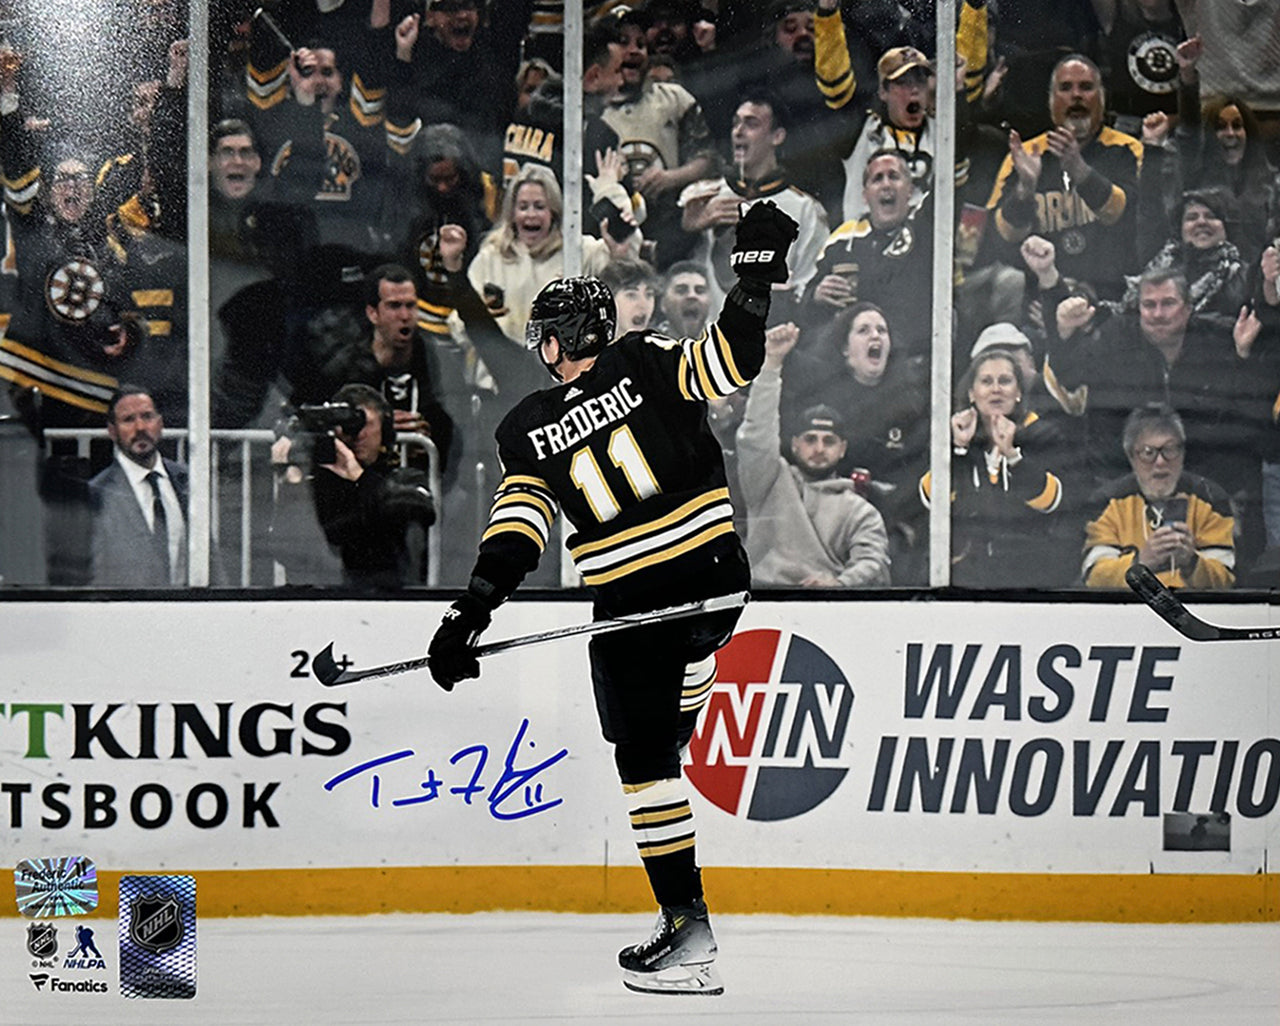 Trent Frederic Goal Celebration Boston Bruins Autographed 16" x 20" Hockey Photo